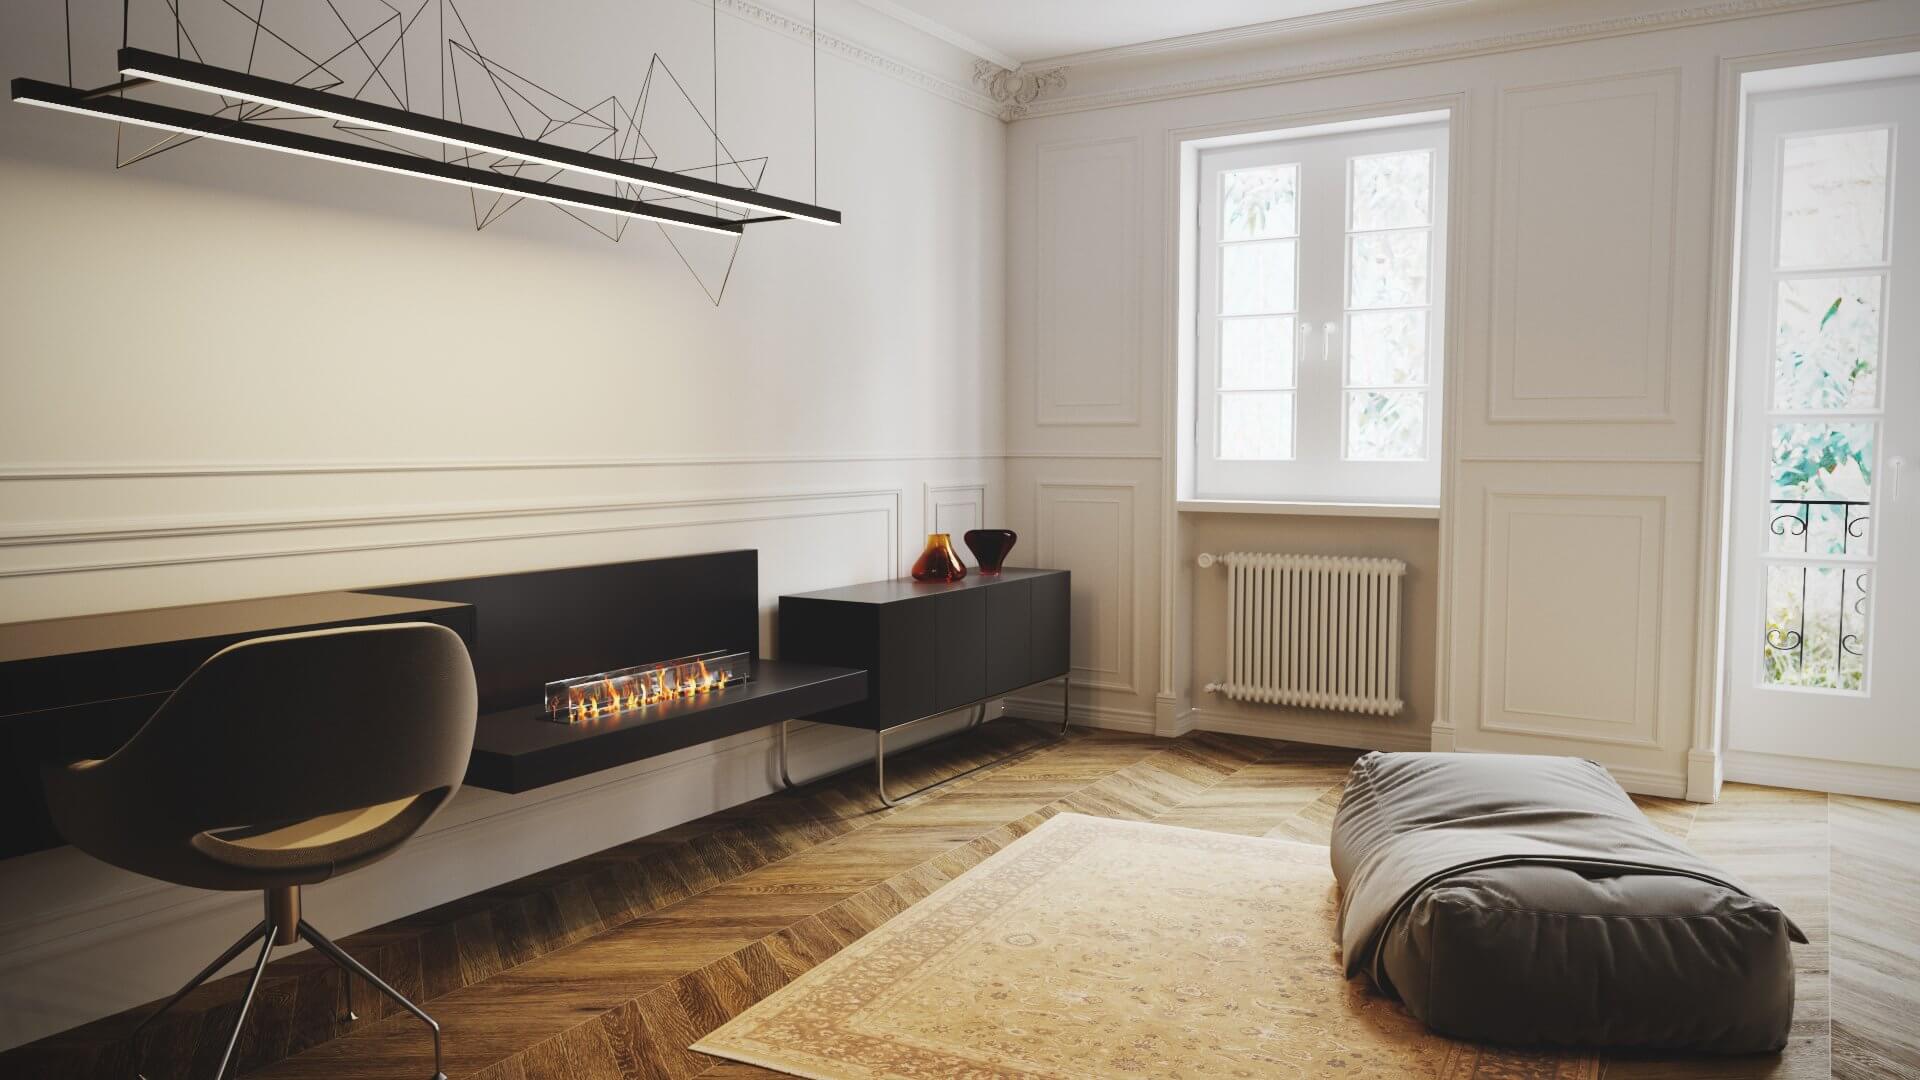 Cozy scandinavian Apartment living room fire place - cgi visualization